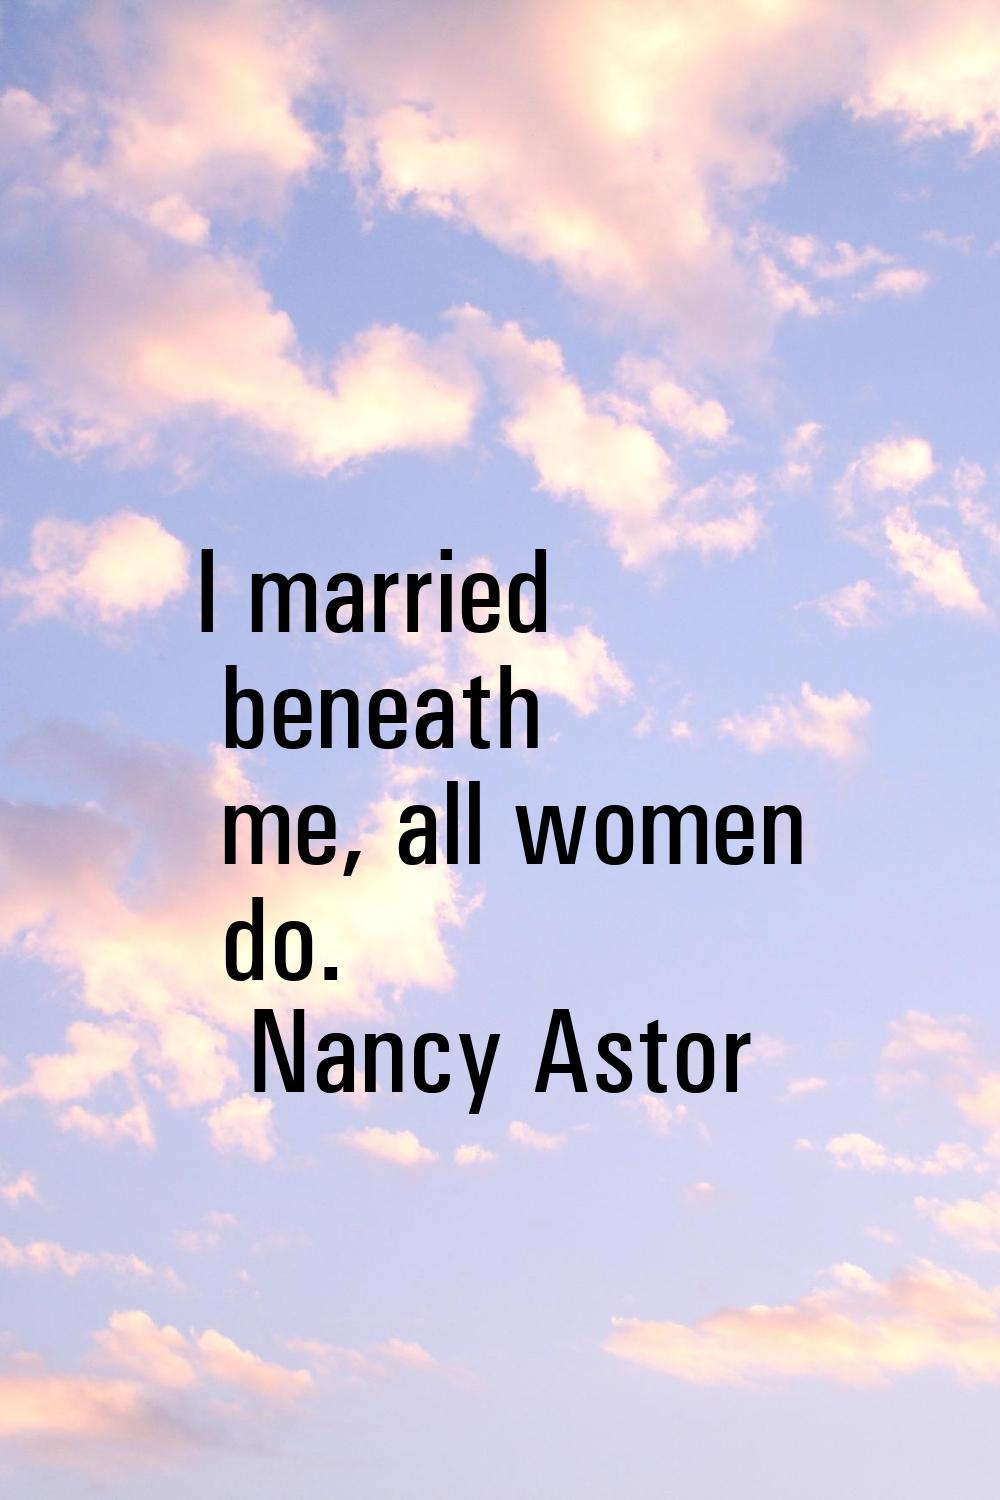 I married beneath me, all women do.